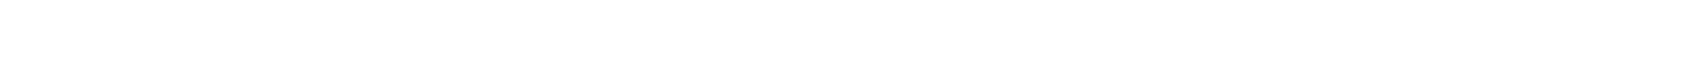 Merko Group Logos